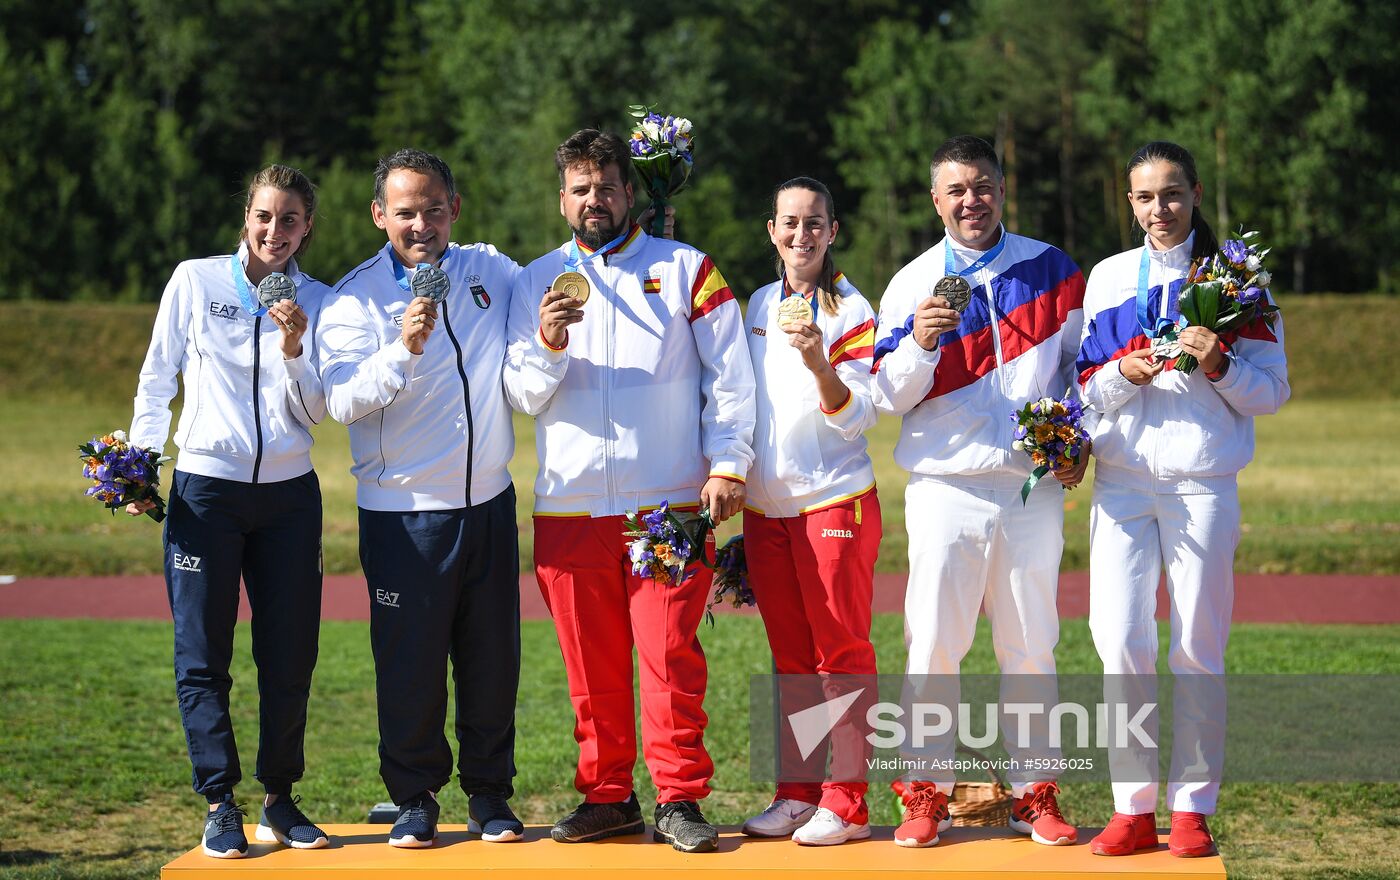 Belarus European Games Shotgun